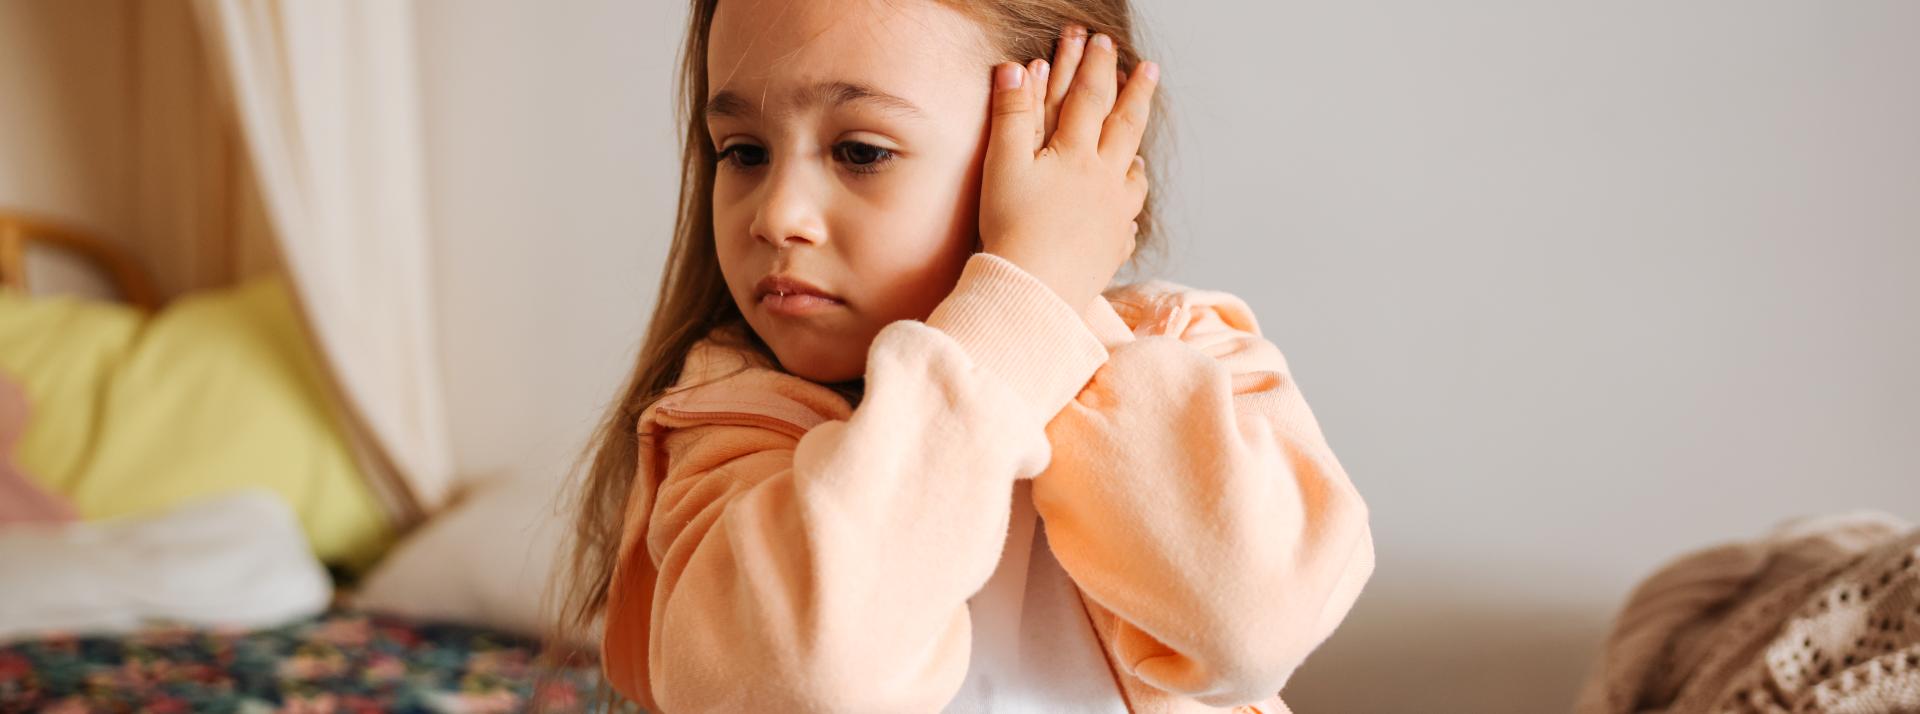 A child experiencing an earache